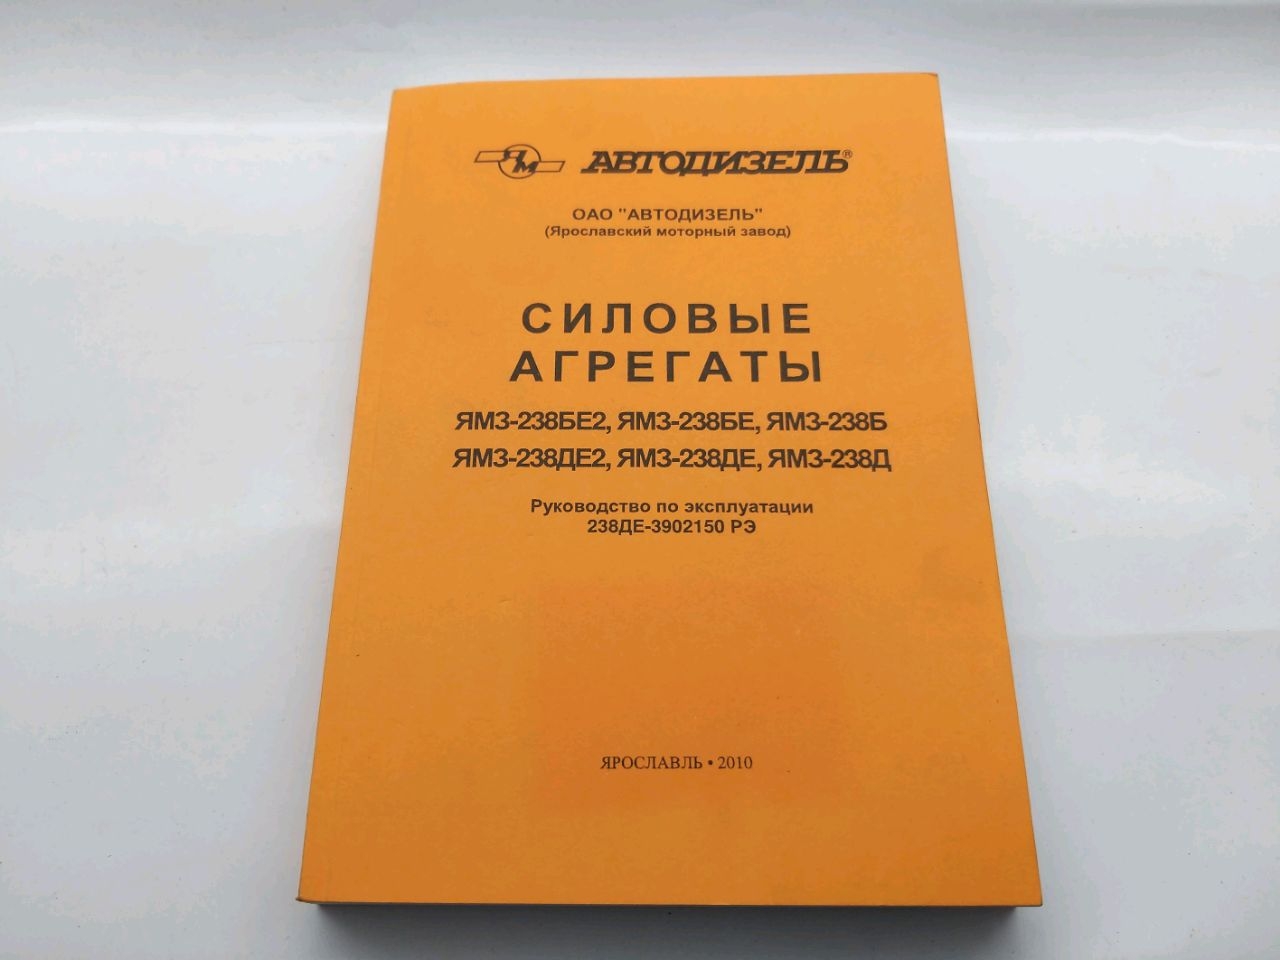 Catalog IaMZ-238DE (instrucţiune la reparare)